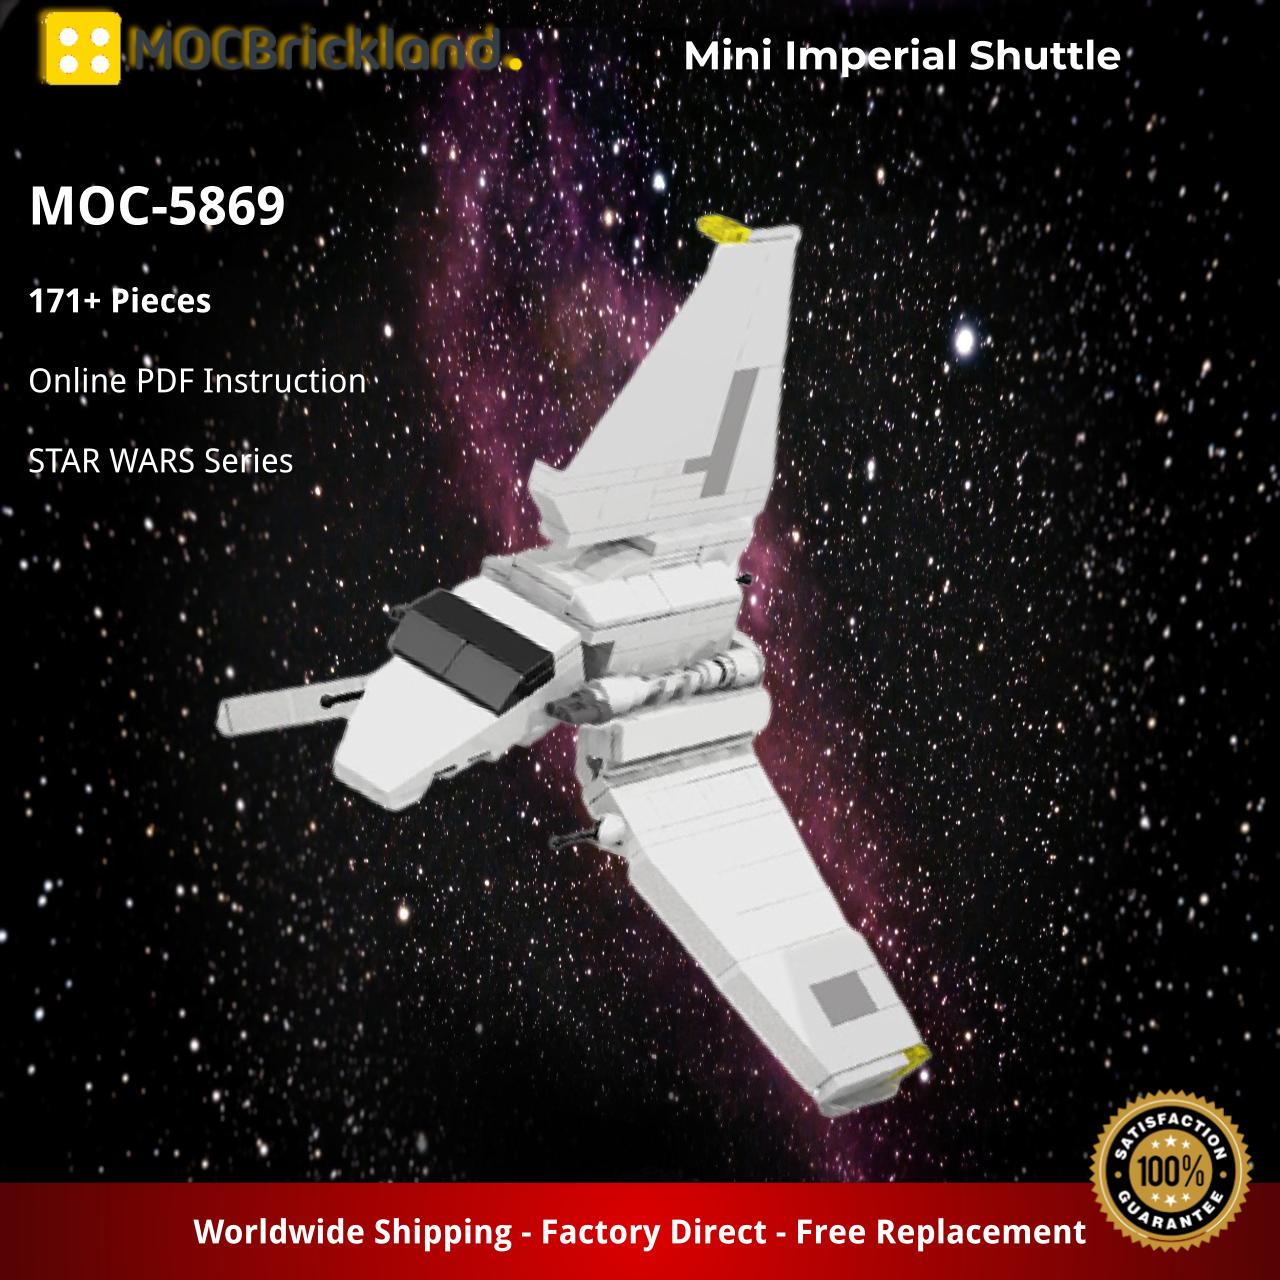 MOCBRICKLAND MOC-5869 Mini Imperial Shuttle